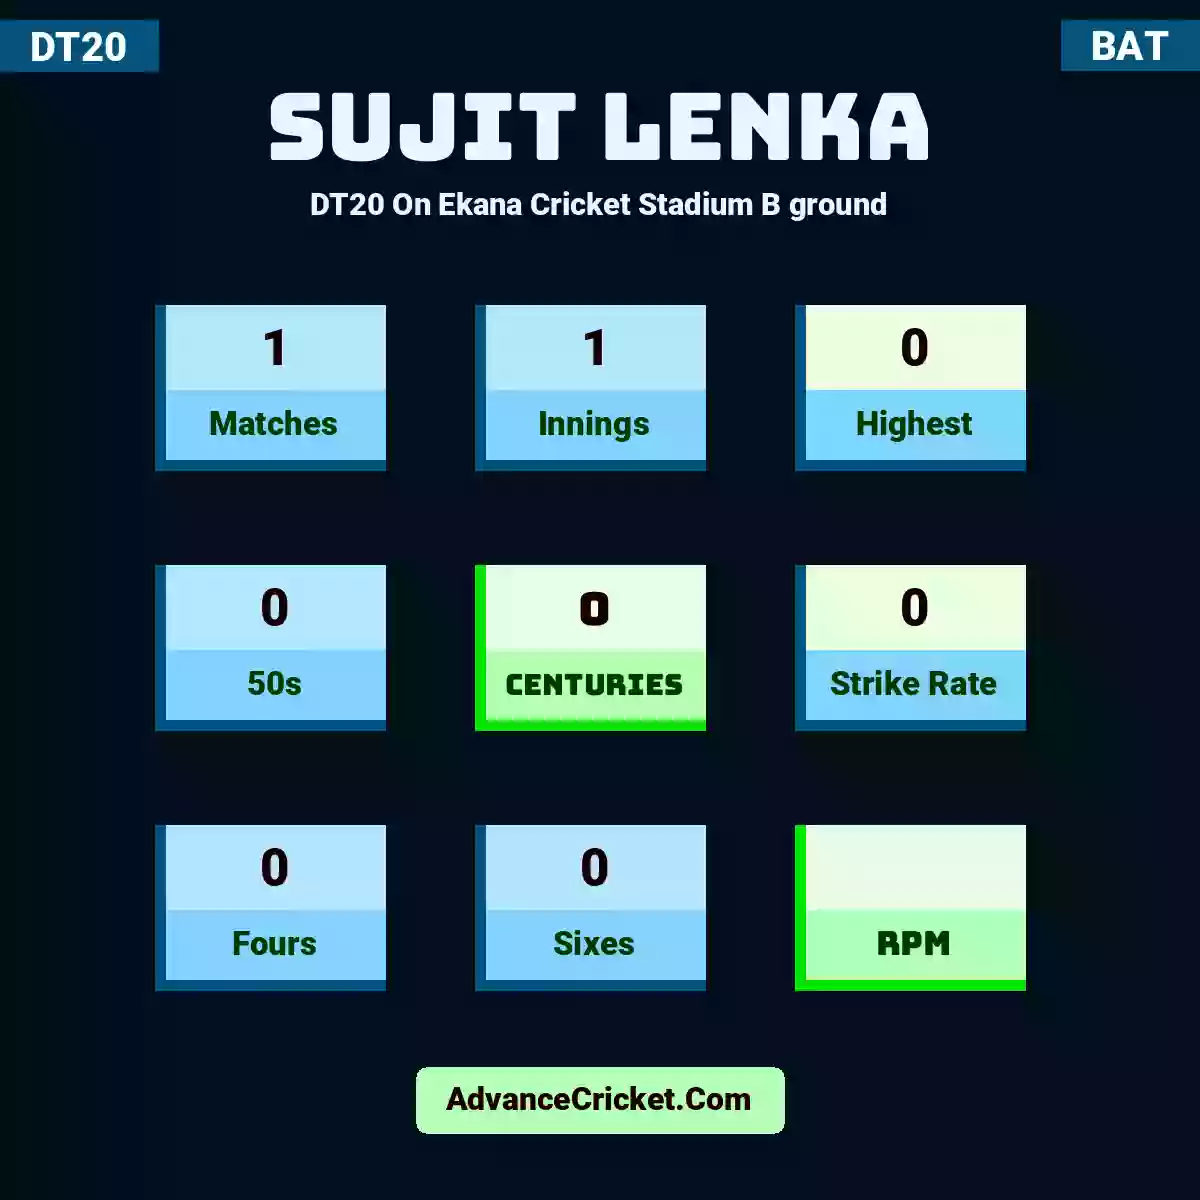 Sujit Lenka DT20  On Ekana Cricket Stadium B ground, Sujit Lenka played 1 matches, scored 0 runs as highest, 0 half-centuries, and 0 centuries, with a strike rate of 0. S.Lenka hit 0 fours and 0 sixes.